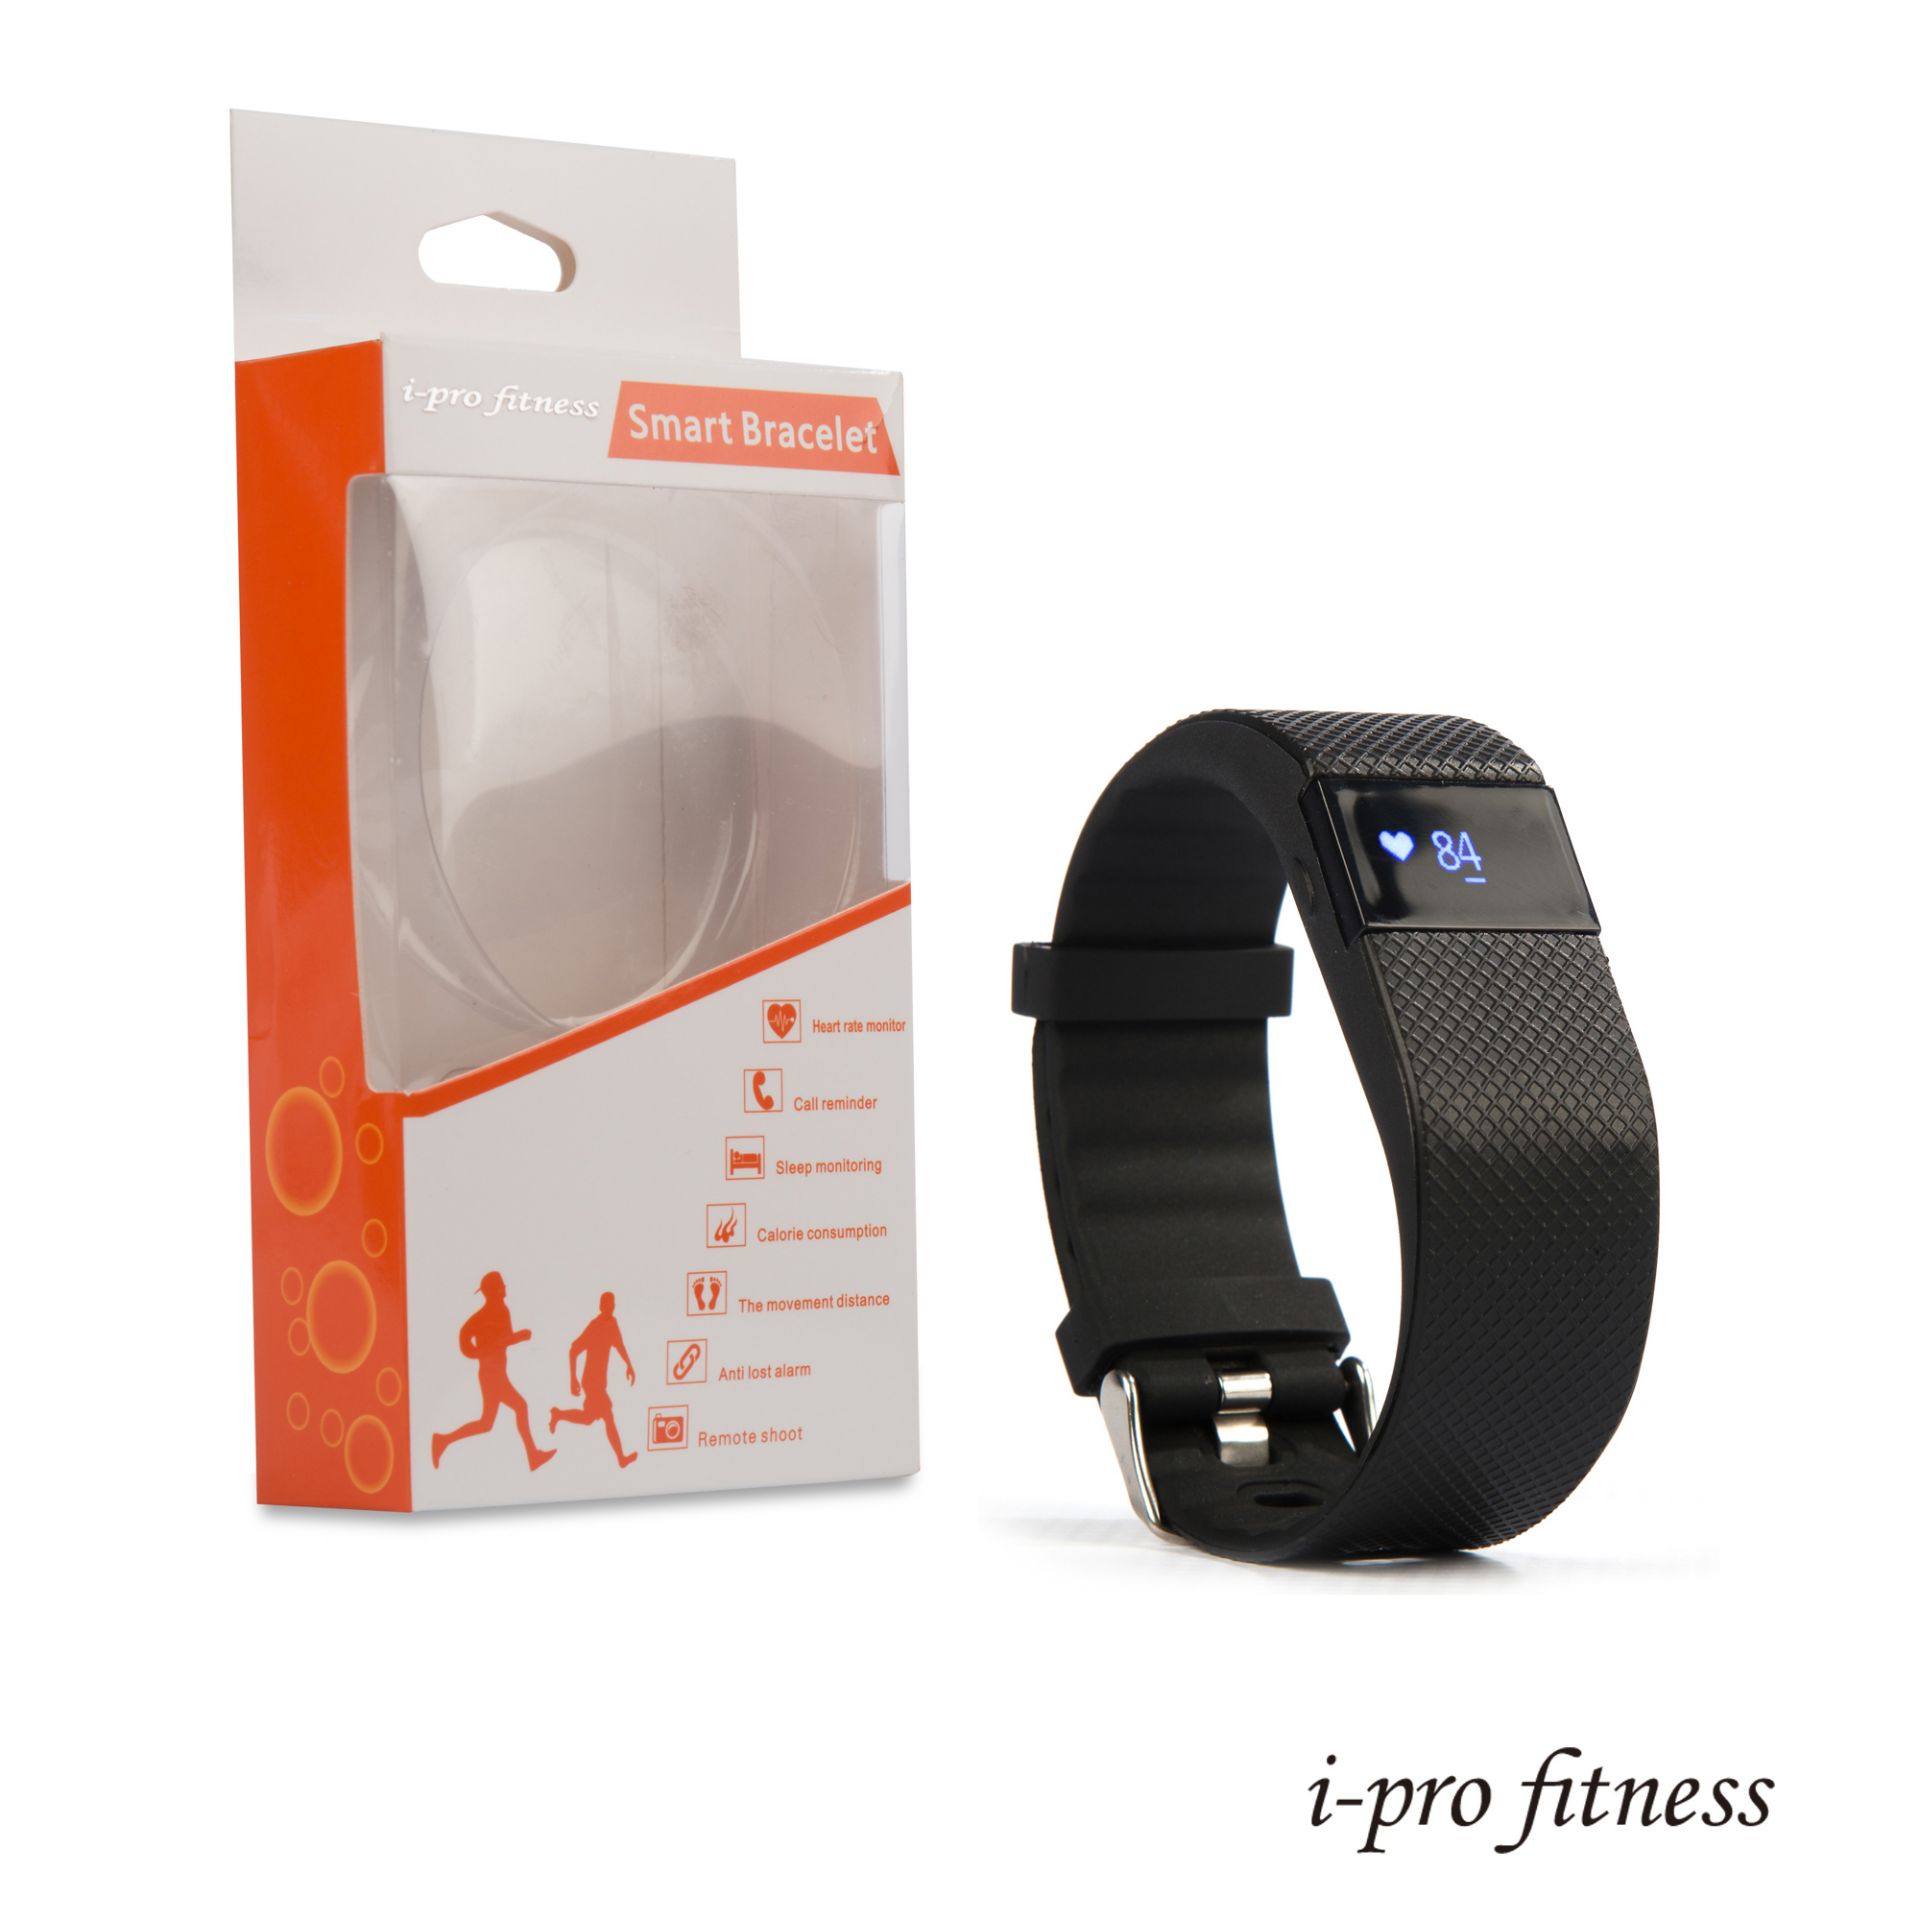 Fitness Tracker i-pro fitness, Bluetooth 4.0 Sports Smart Bracelet, Heart Rate Monitor & - Image 3 of 8